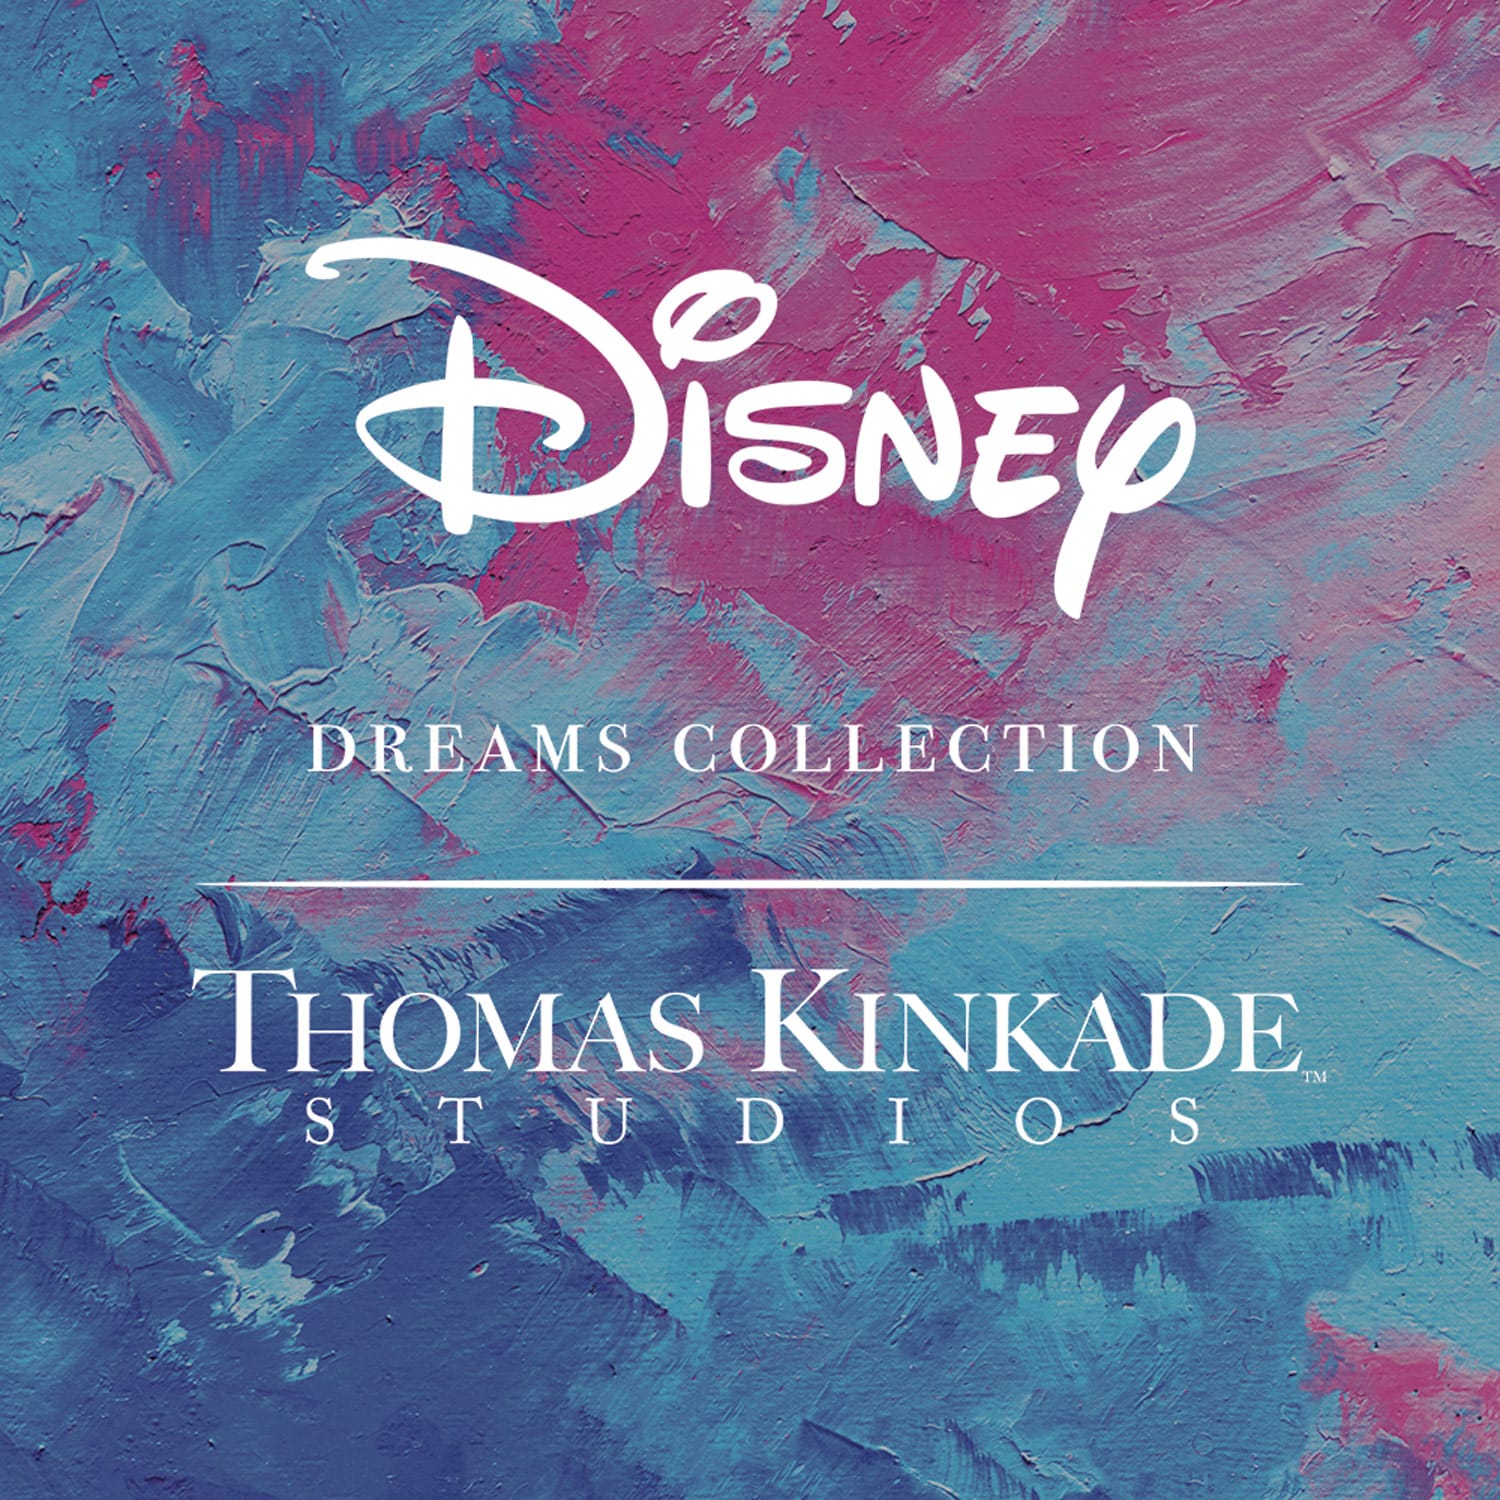 Disney Parks Events News - Thomas Kinkade Studios